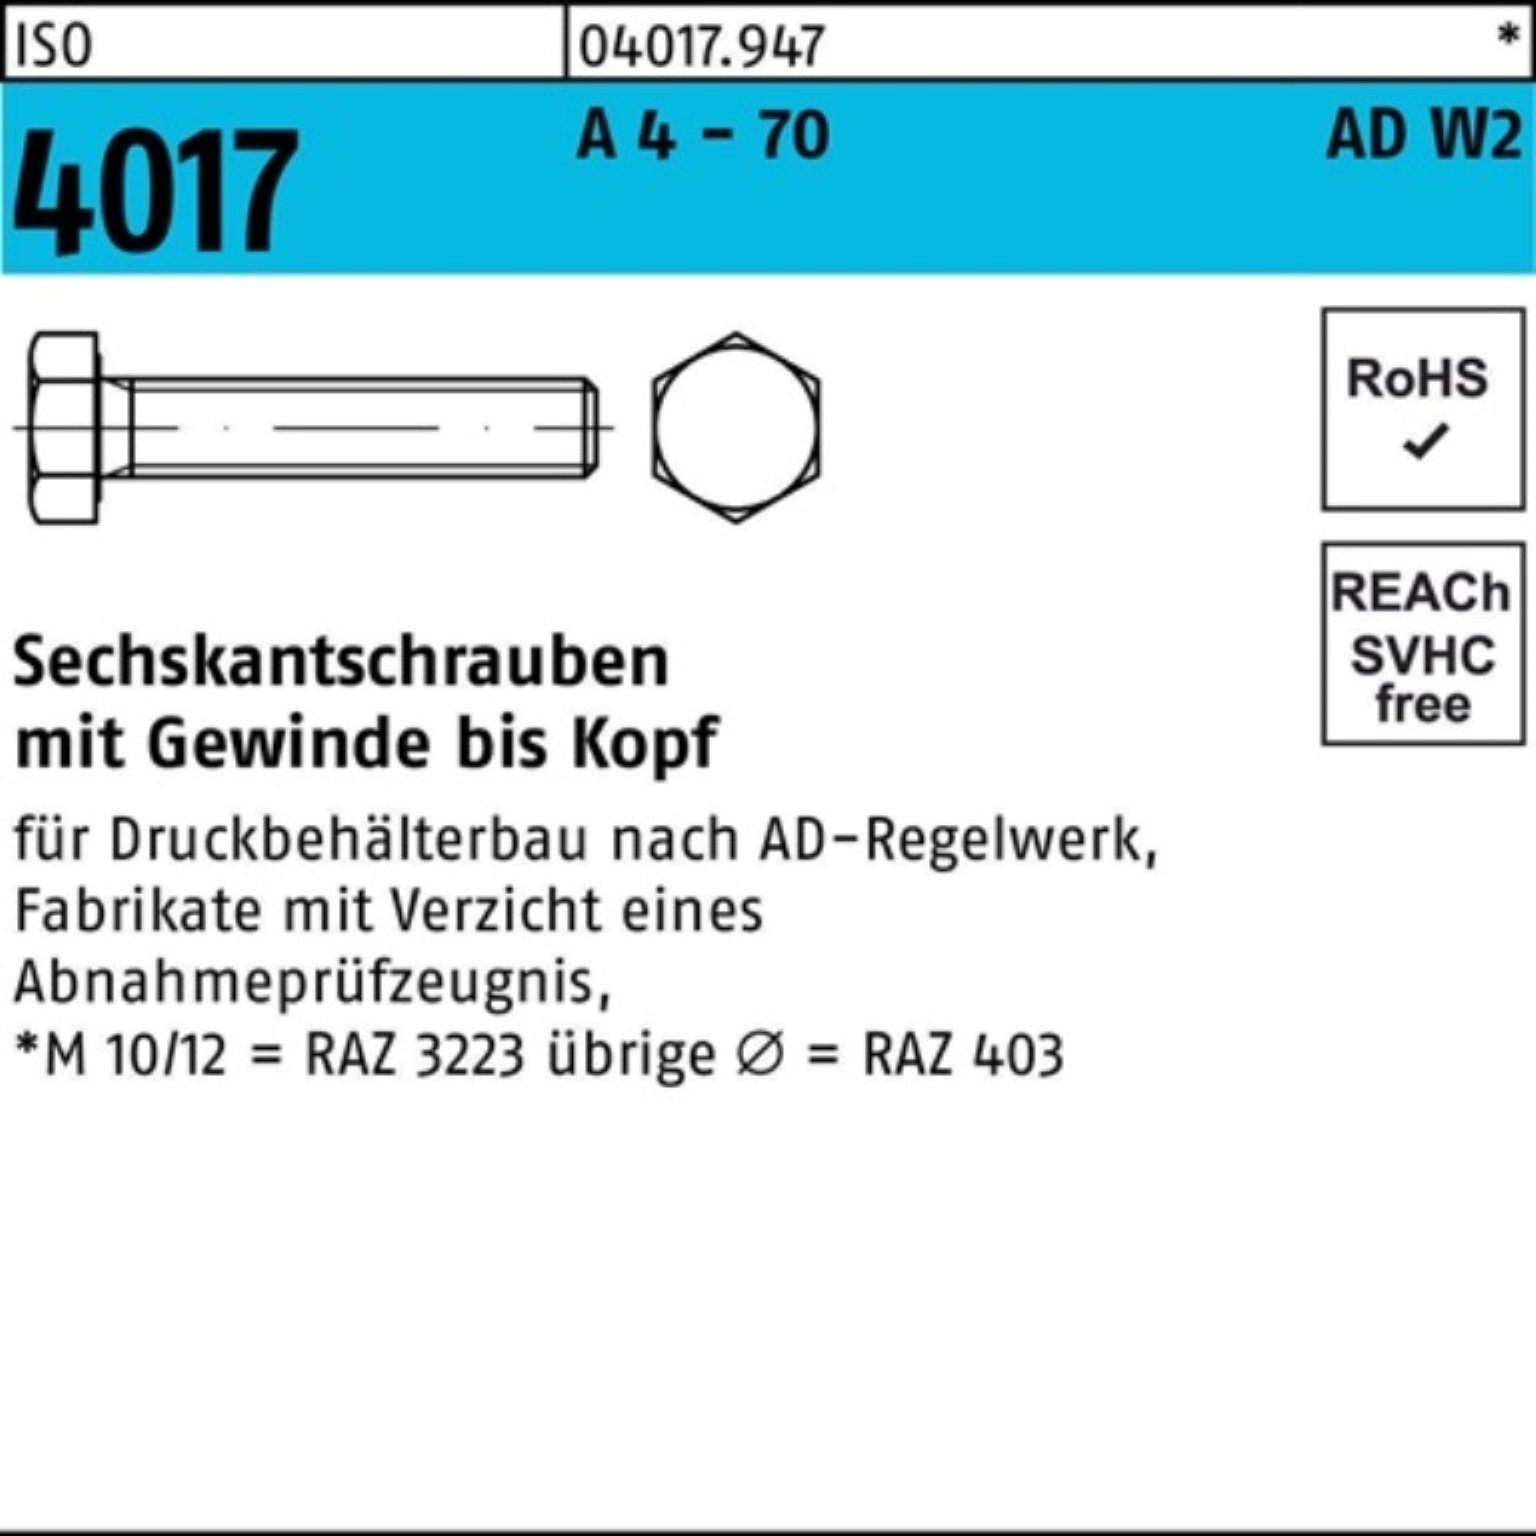 Bufab Sechskantschraube 100er Pack Sechskantschraube 4 40 100 - AD-W2 70 VG 4017 ISO St A M10x